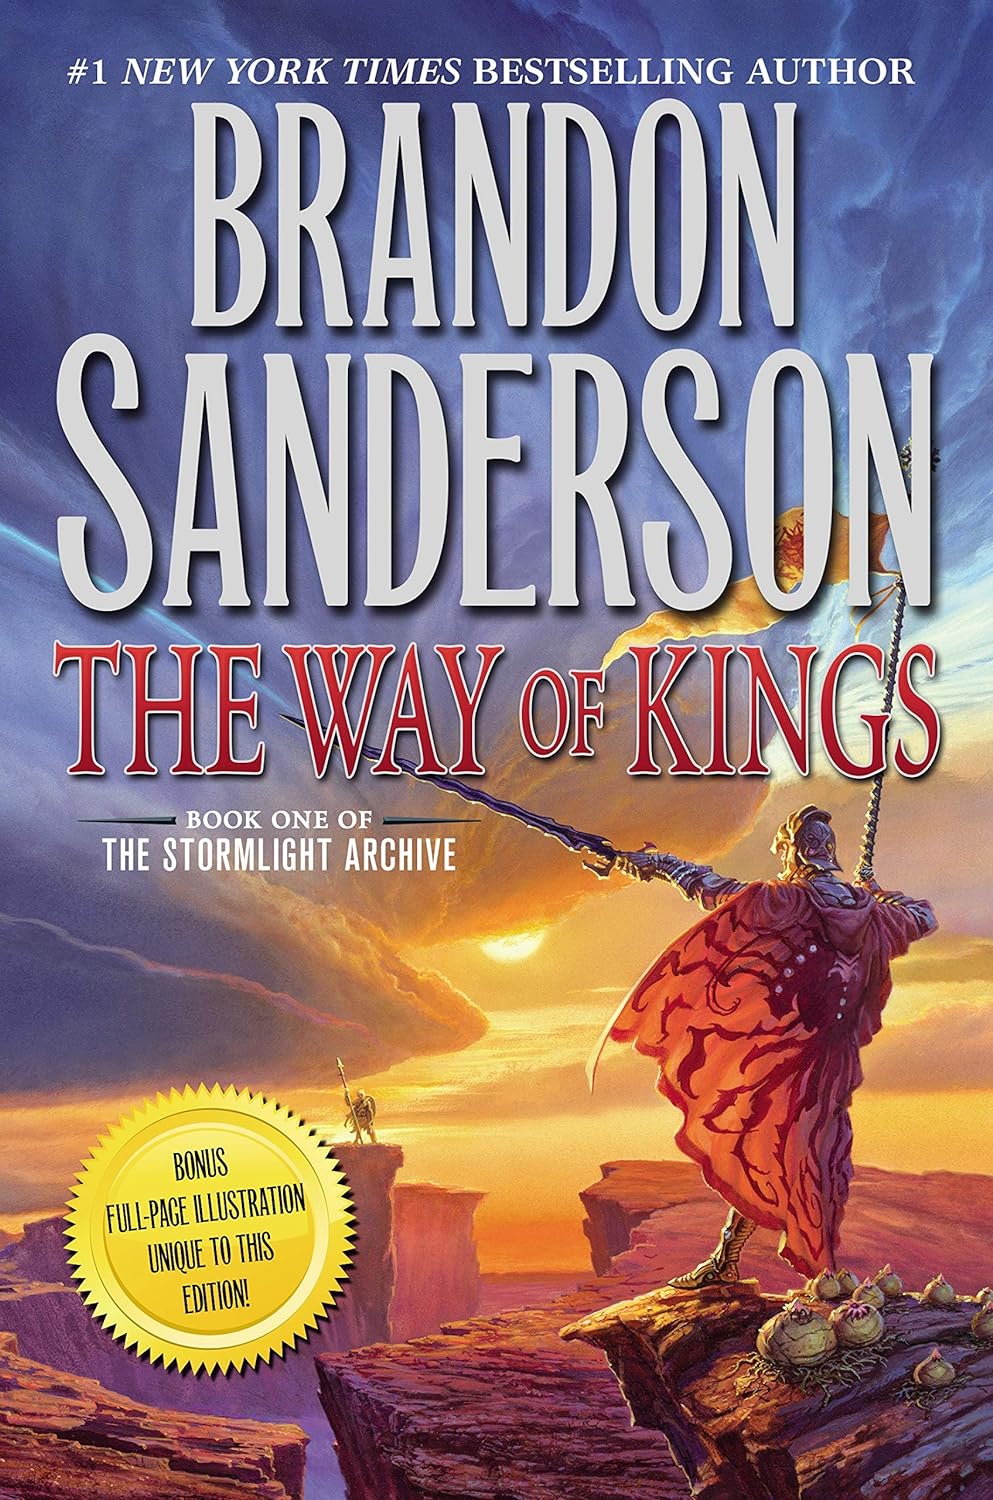 The Way of Kings, by Brandon Sanderson